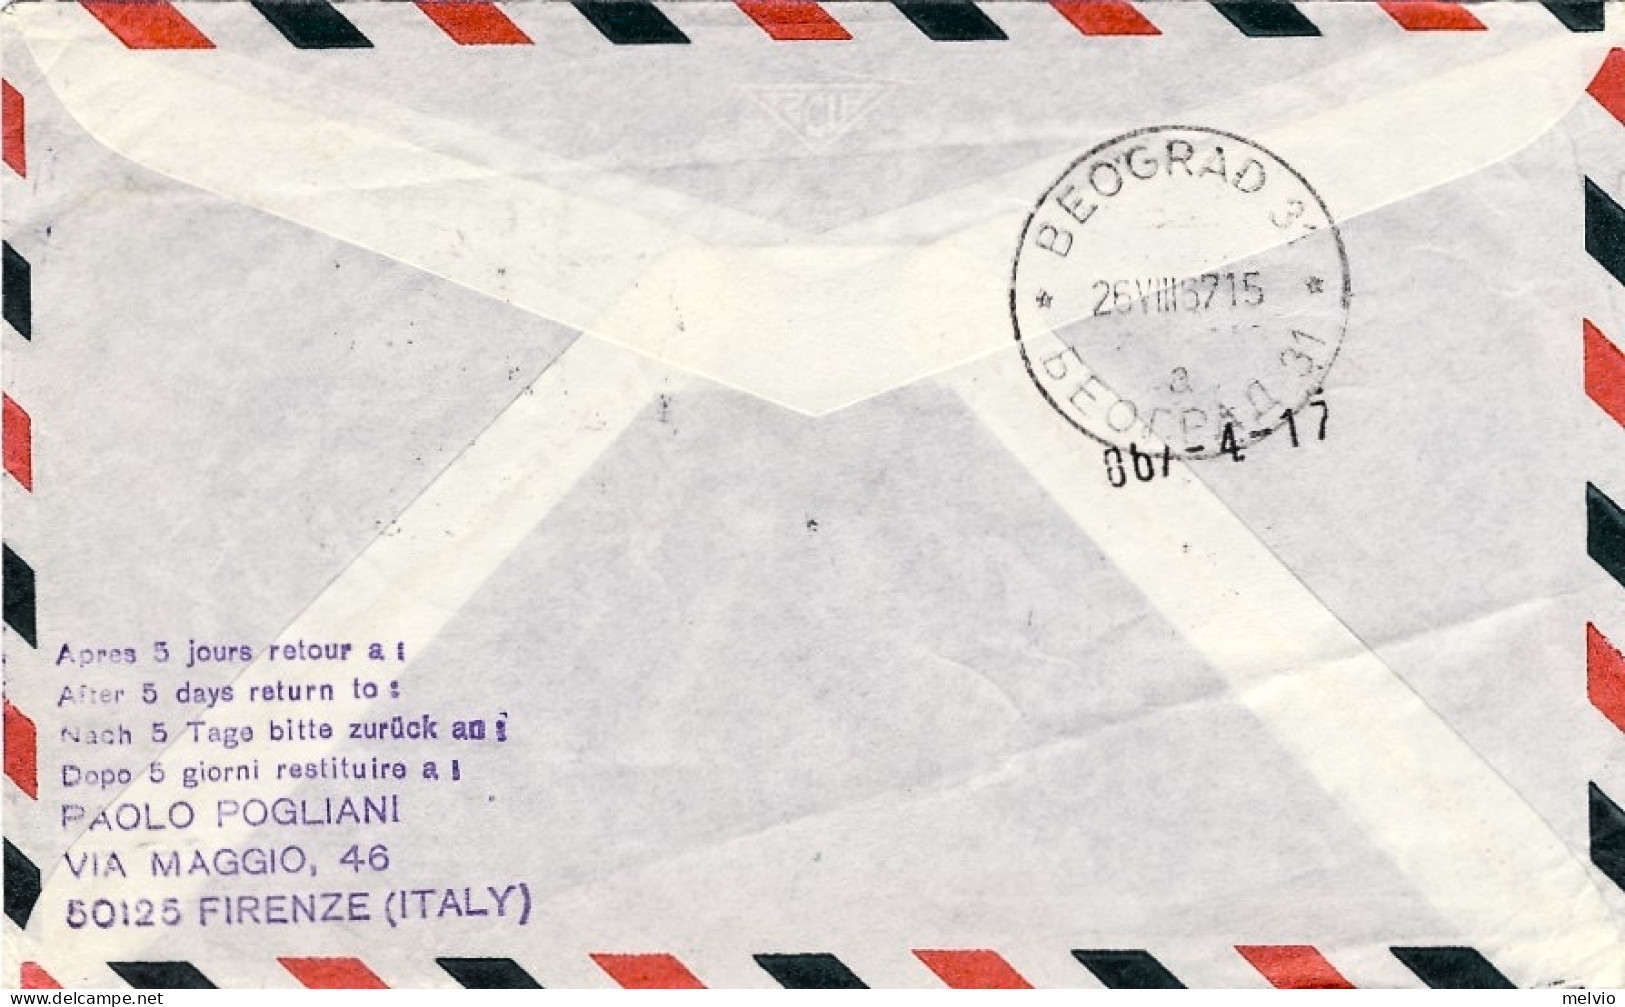 San Marino-1967 I^volo Lufthansa LH 194 Monaco-Belgrado - Poste Aérienne